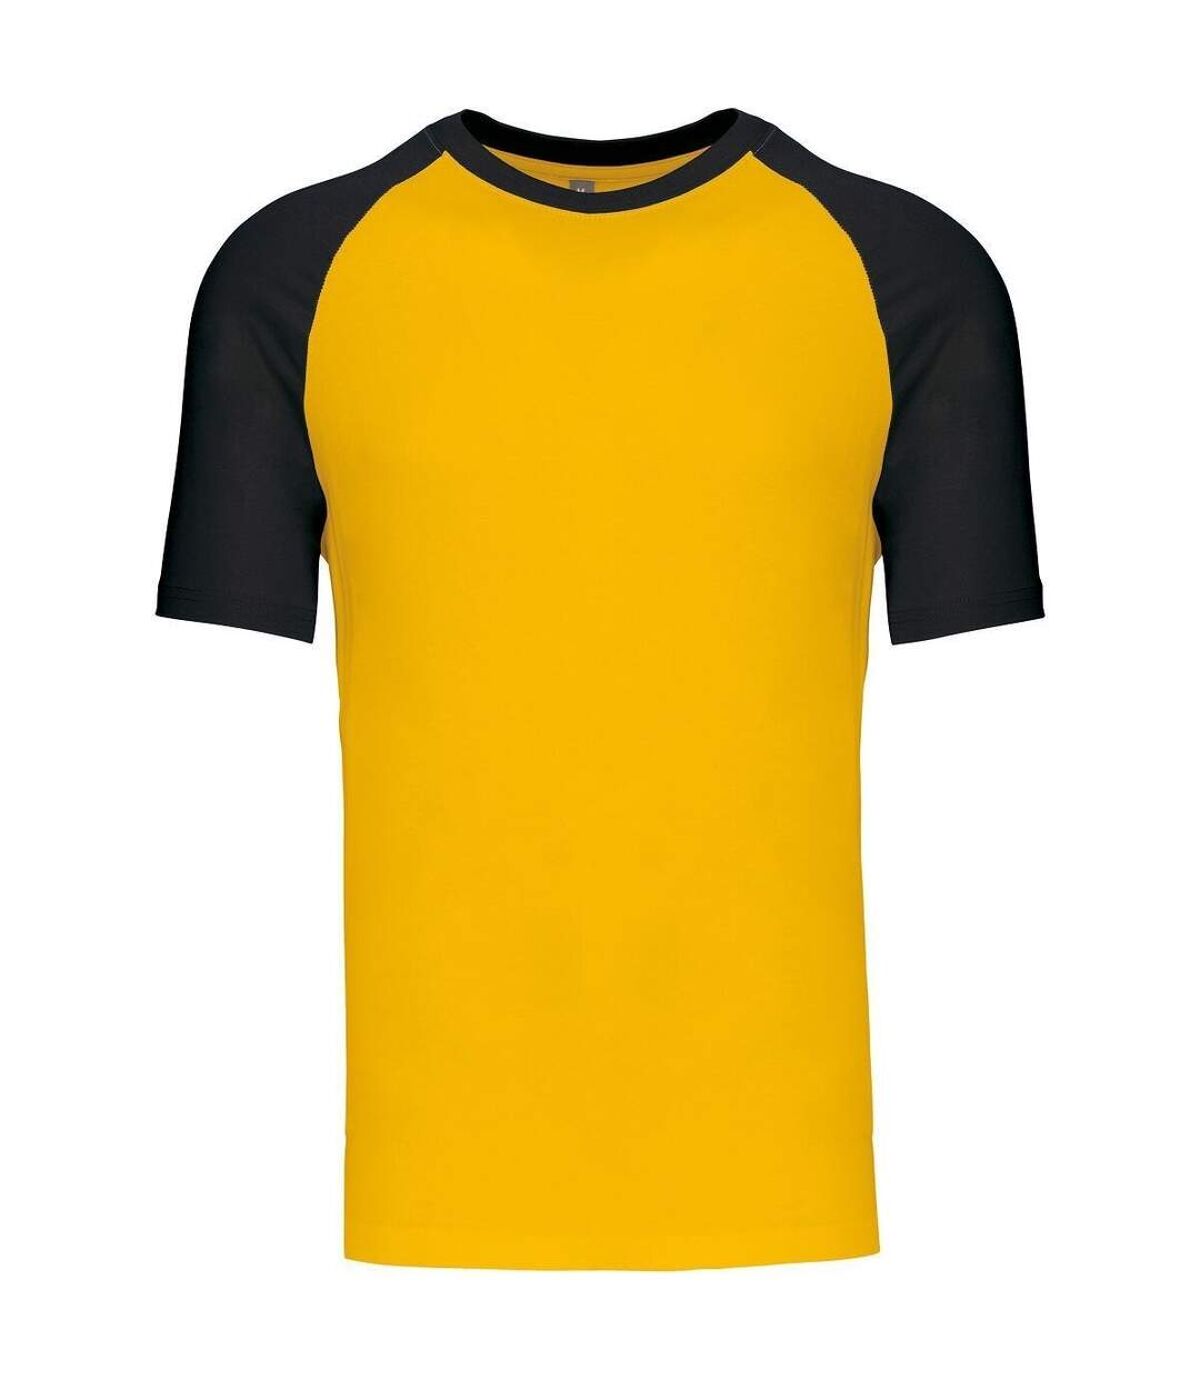 T-shirt bicolore baseball - Homme - K330 - jaune et noir